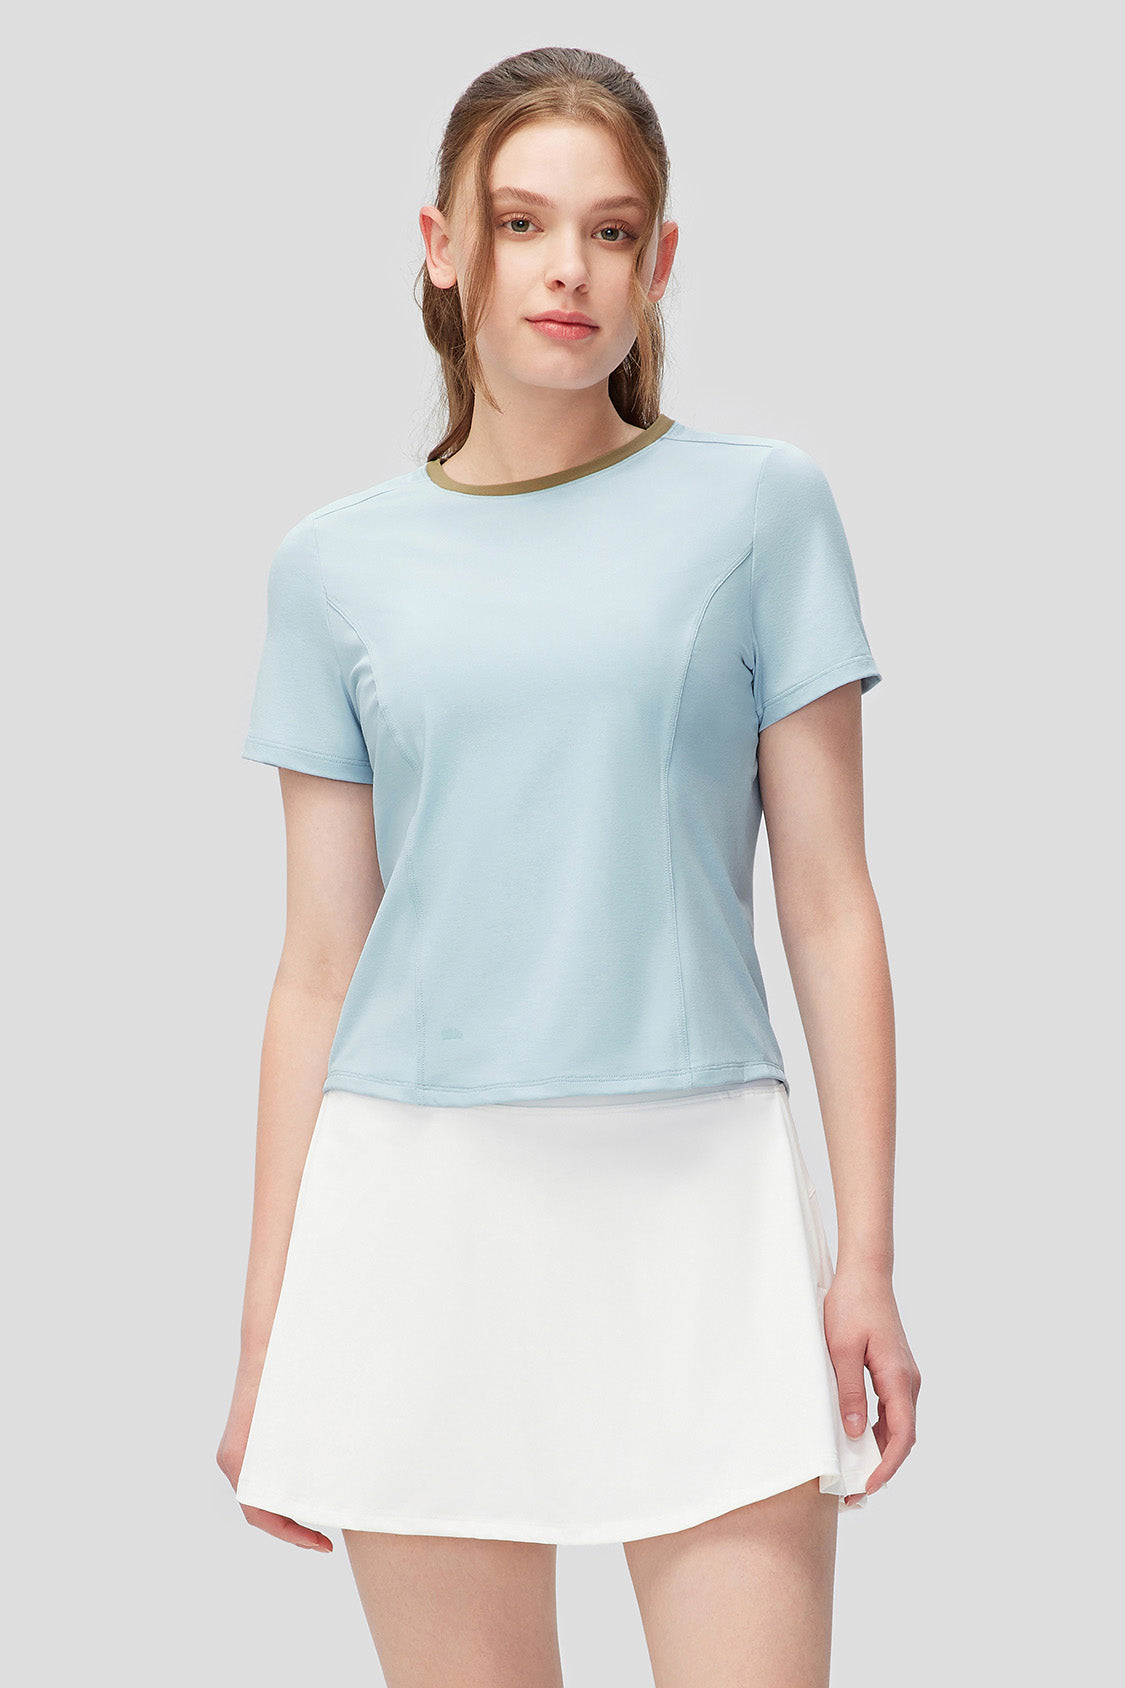 beneunder women's tops t-shirts #color_misty blue